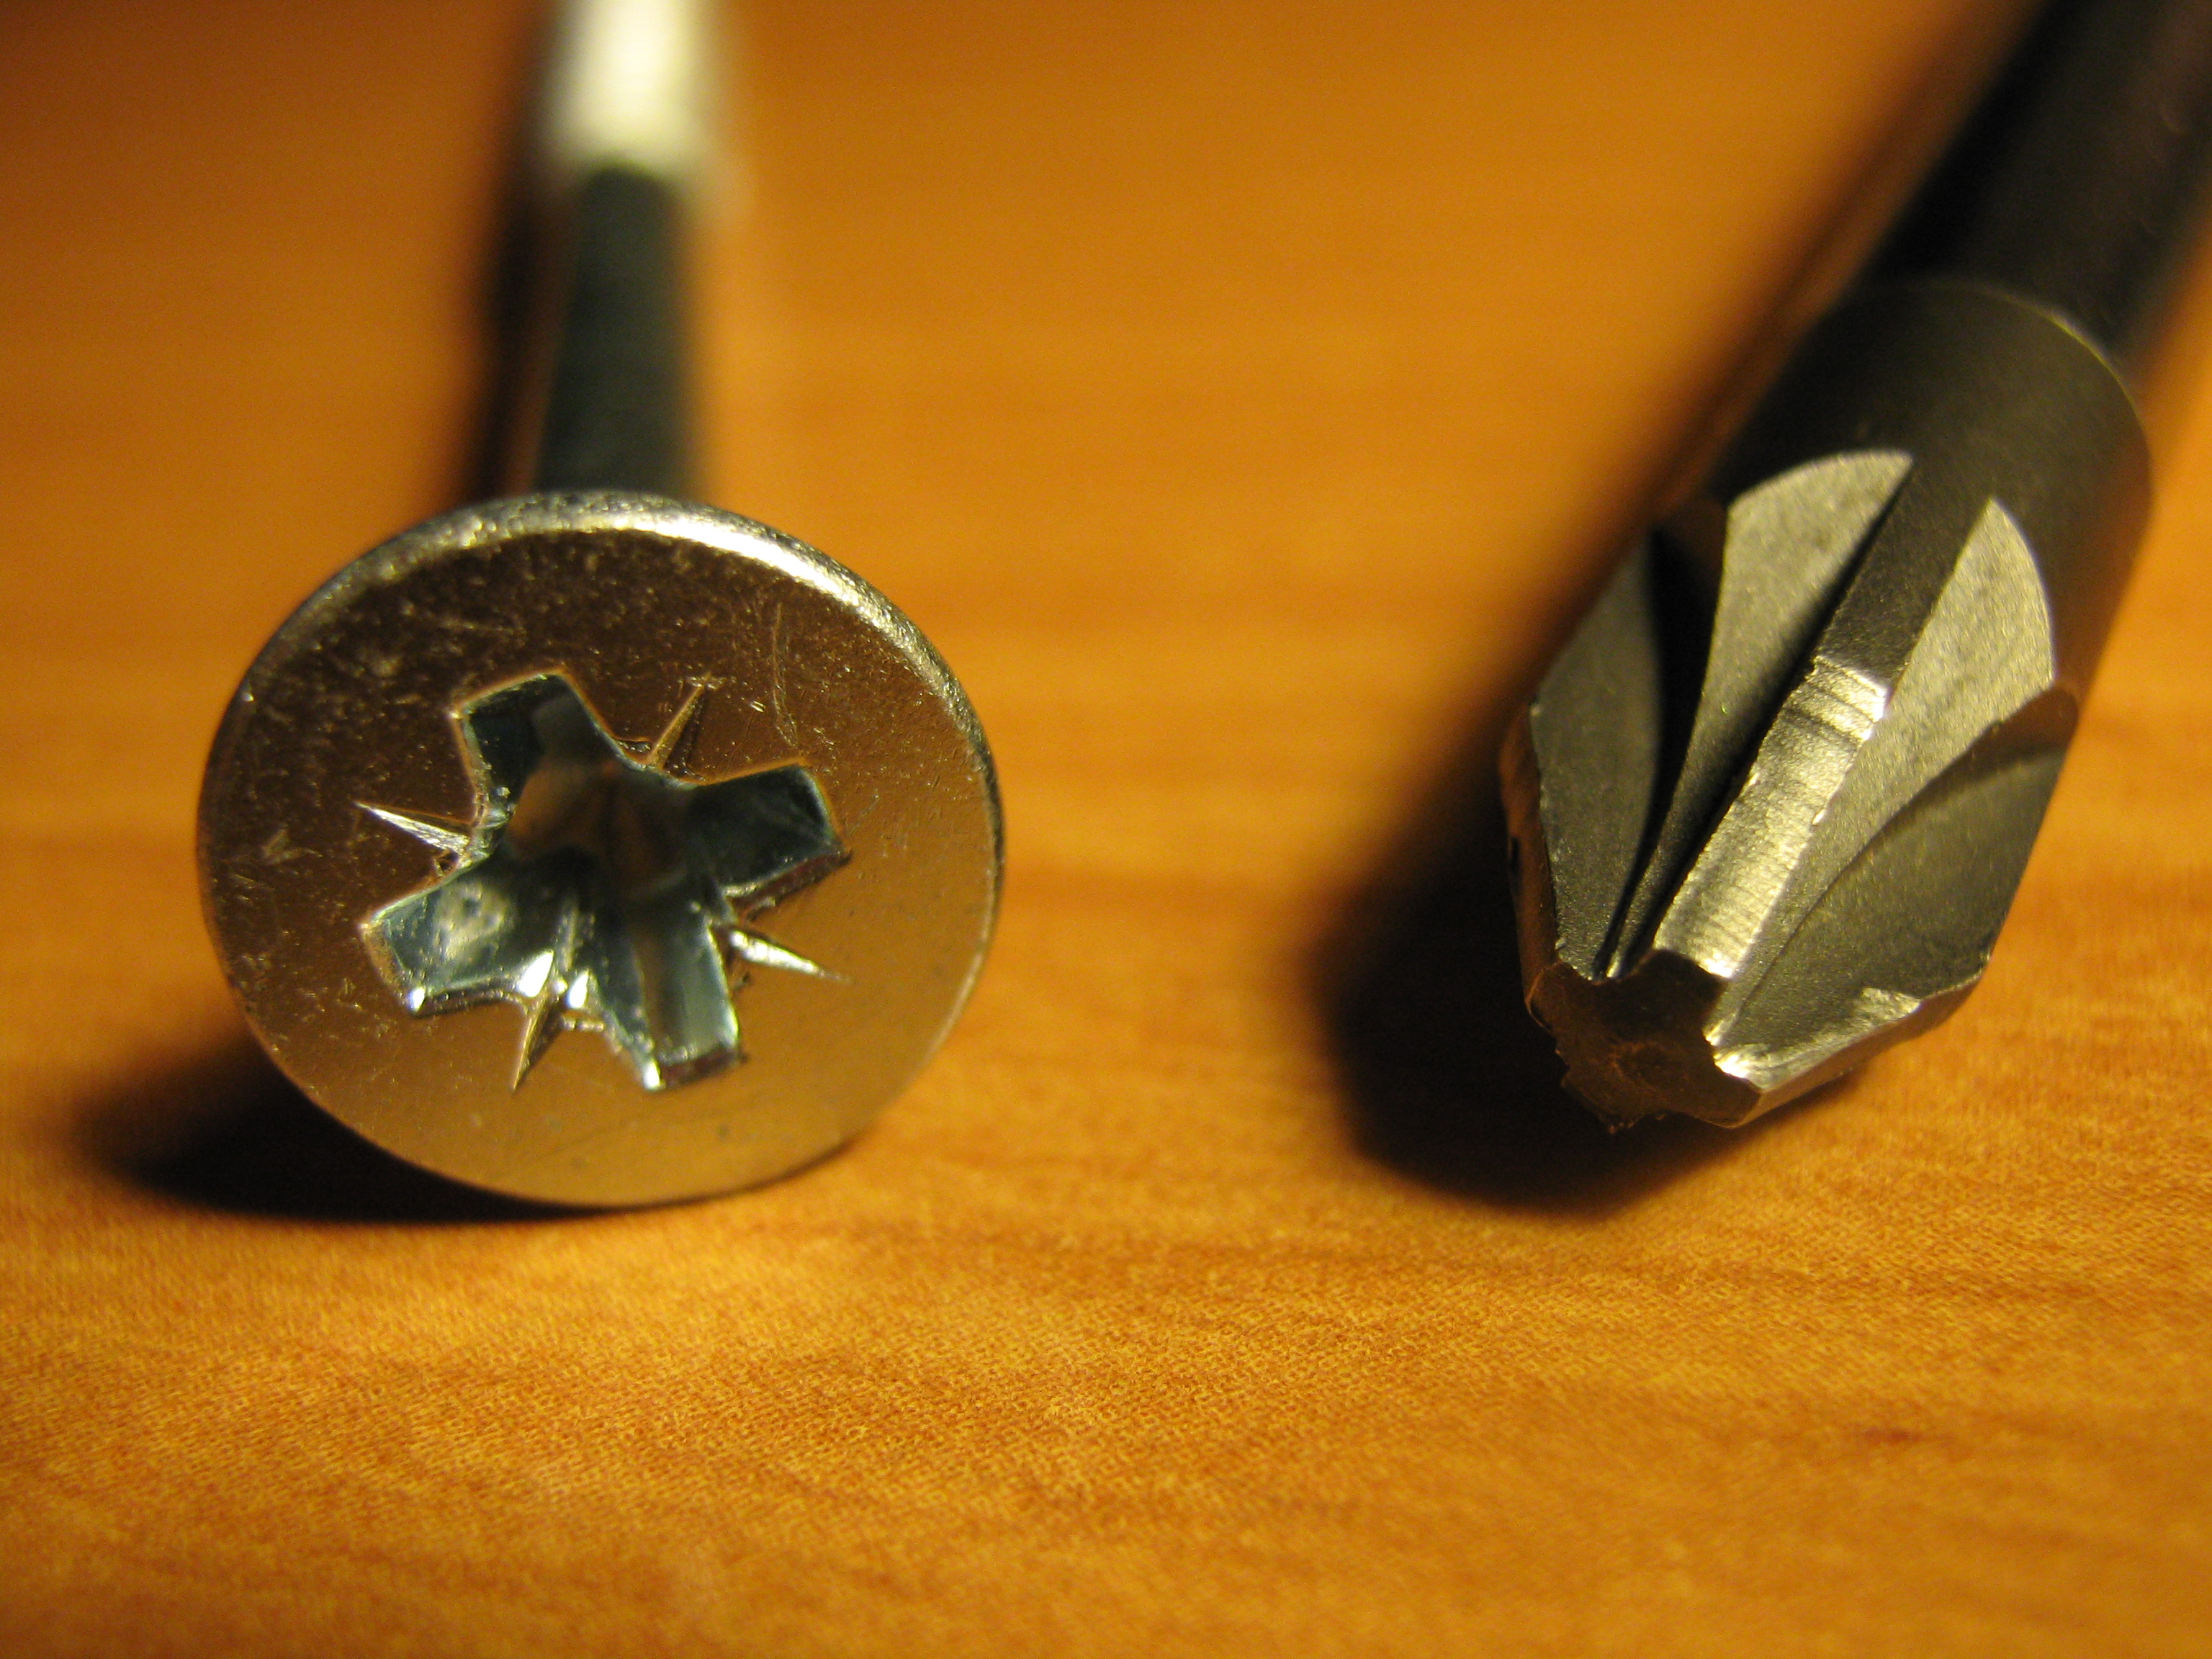 POZIDRIV screwdriver and screw